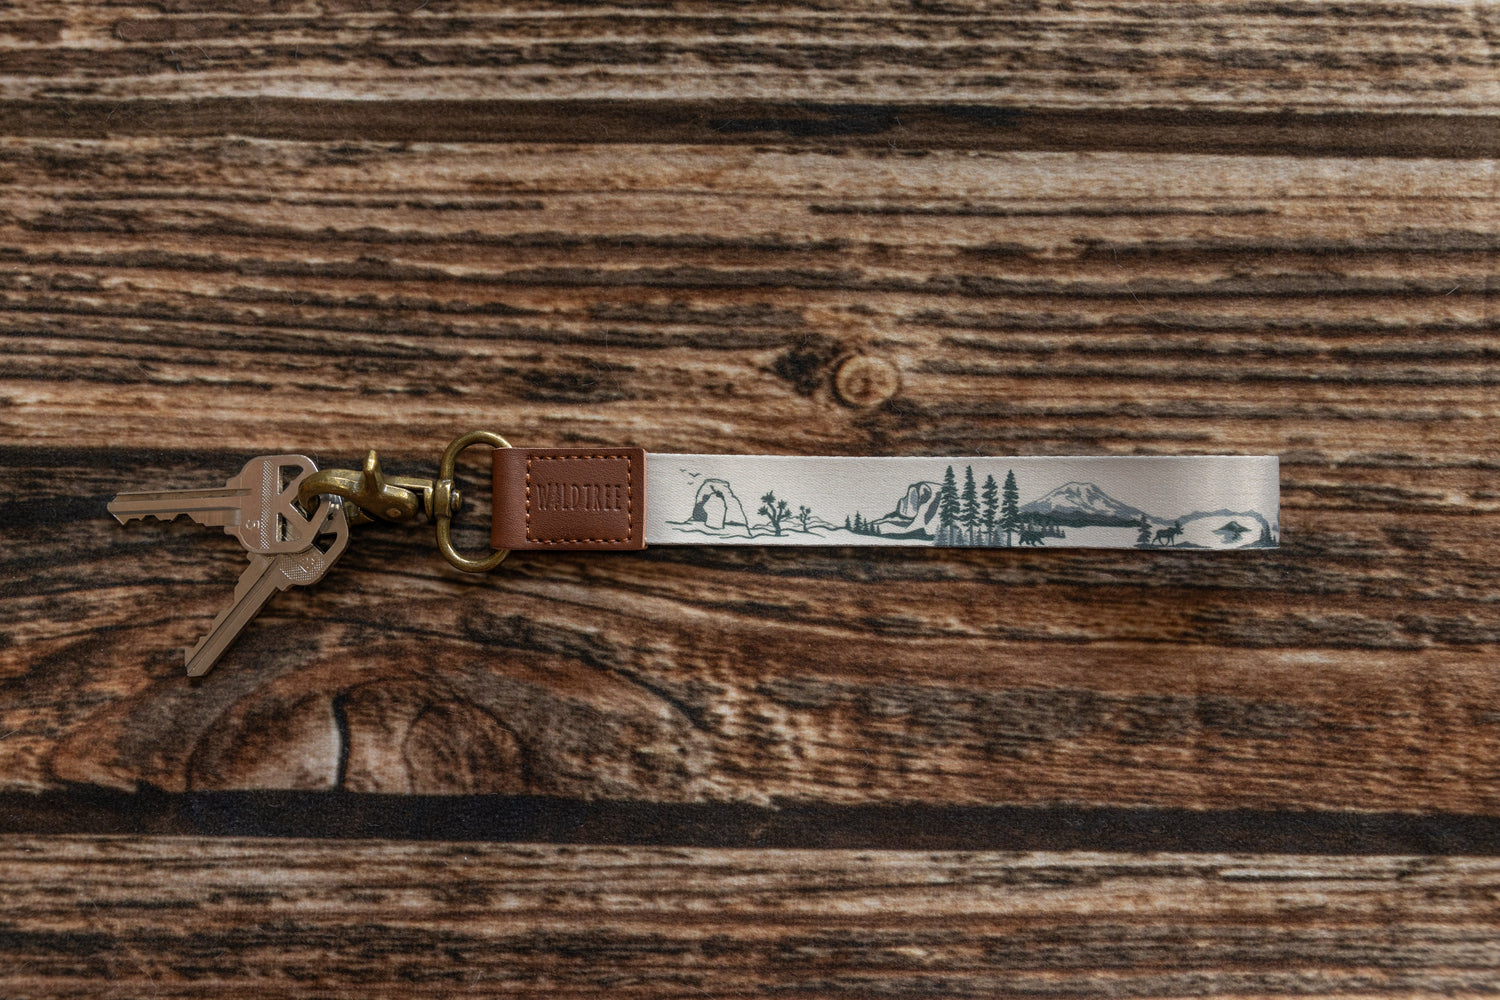 Unique designed wristlet keychain featuring popular national parks